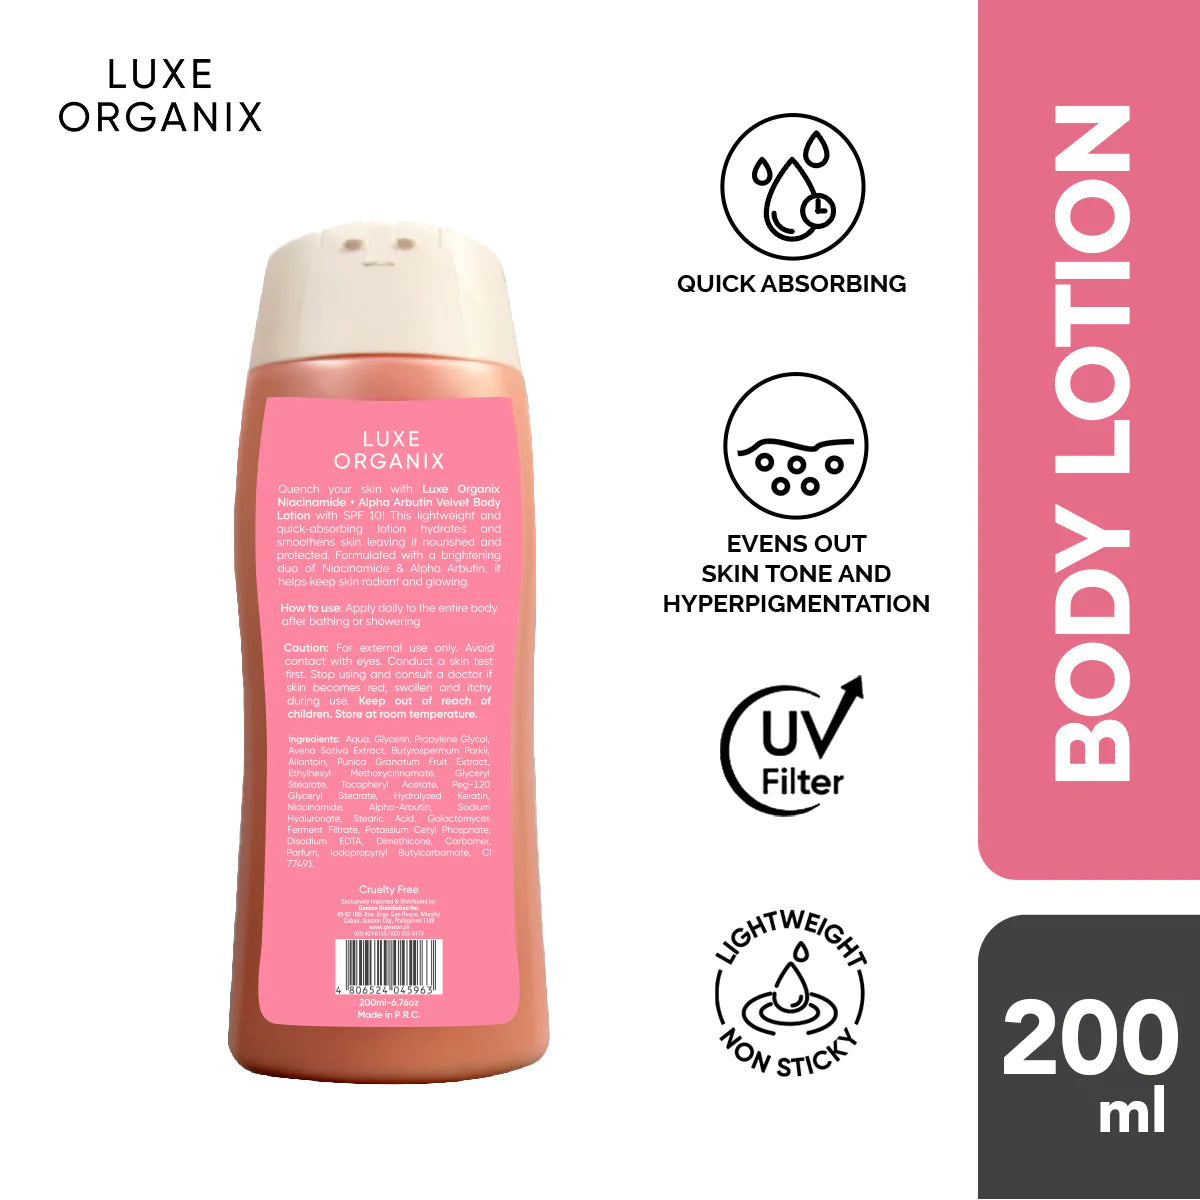 Luxe Organix Niacinamide + Alpha Arbutin Velvet Body Lotion SPF10 - True Beauty Skin Essentials